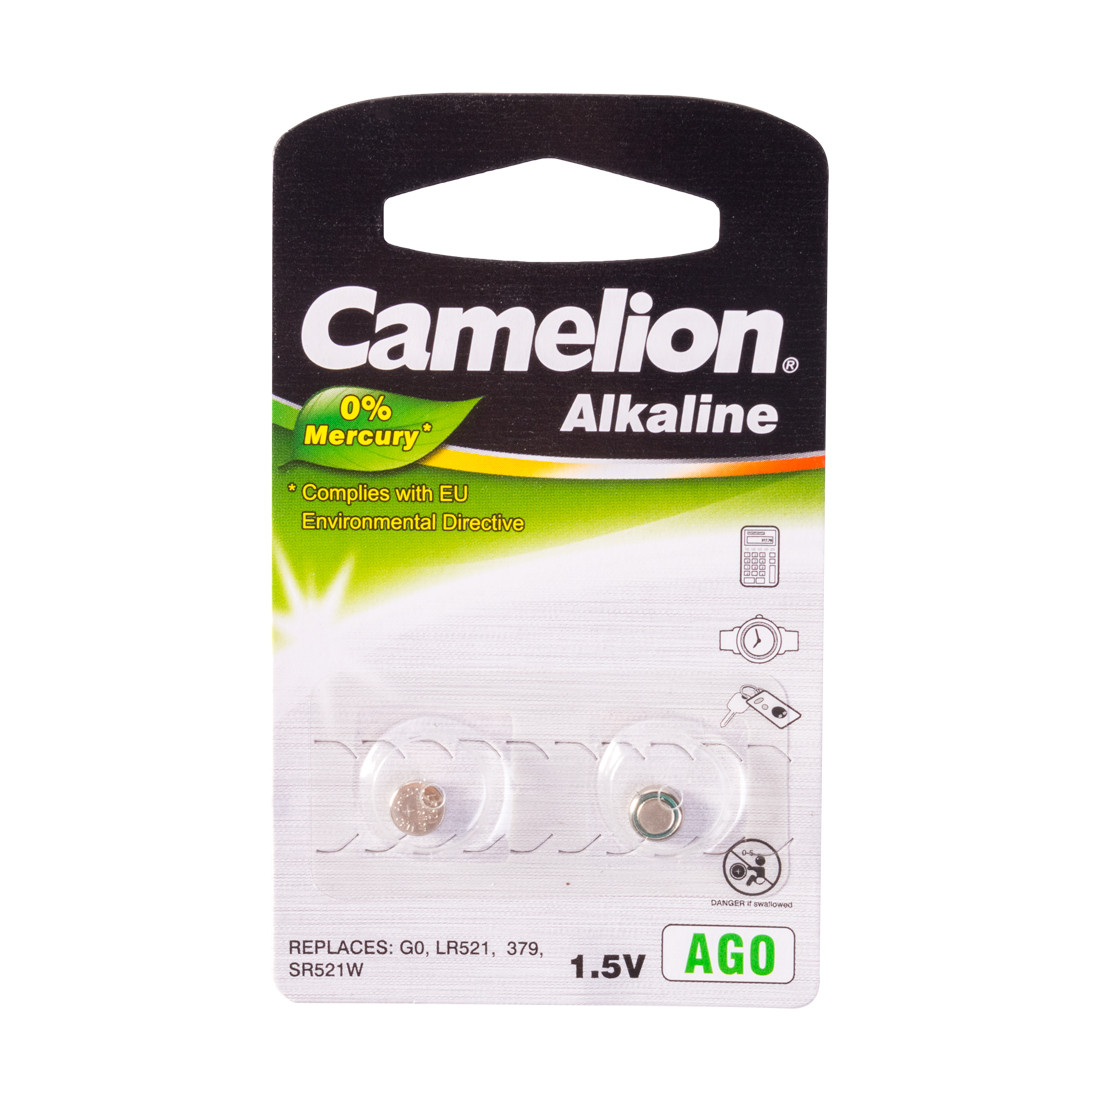 CAMELION AG0-BP2(0%Hg) Батарейка Alkaline, тип AG0, 1.5V, 0% Ртути, 2 шт. в блистере